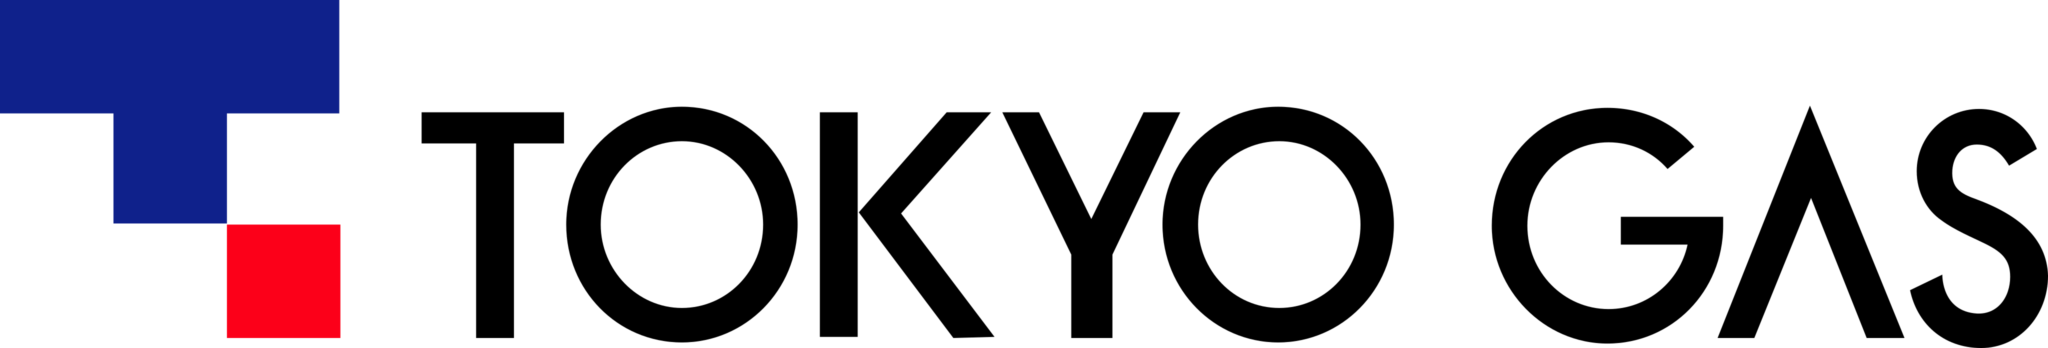 Tokyo Gas Logo - PNG e Vetor - Download de Logo